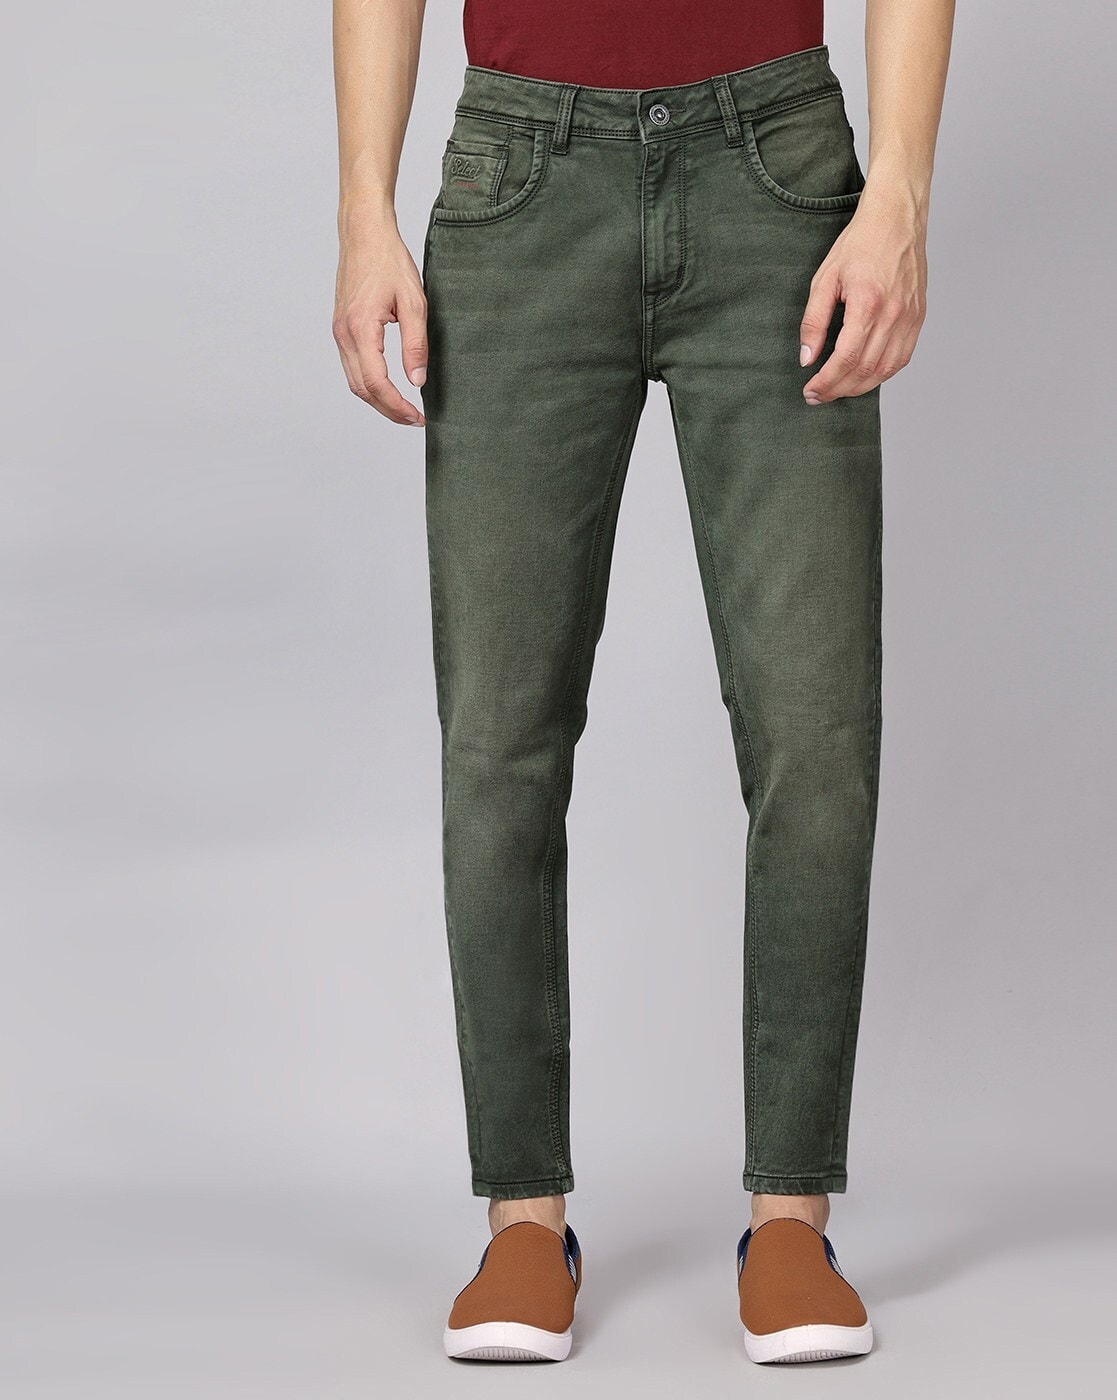 Kozzak olive super skinny fit cargo jeans - G3-MJE4631 | G3fashion.com